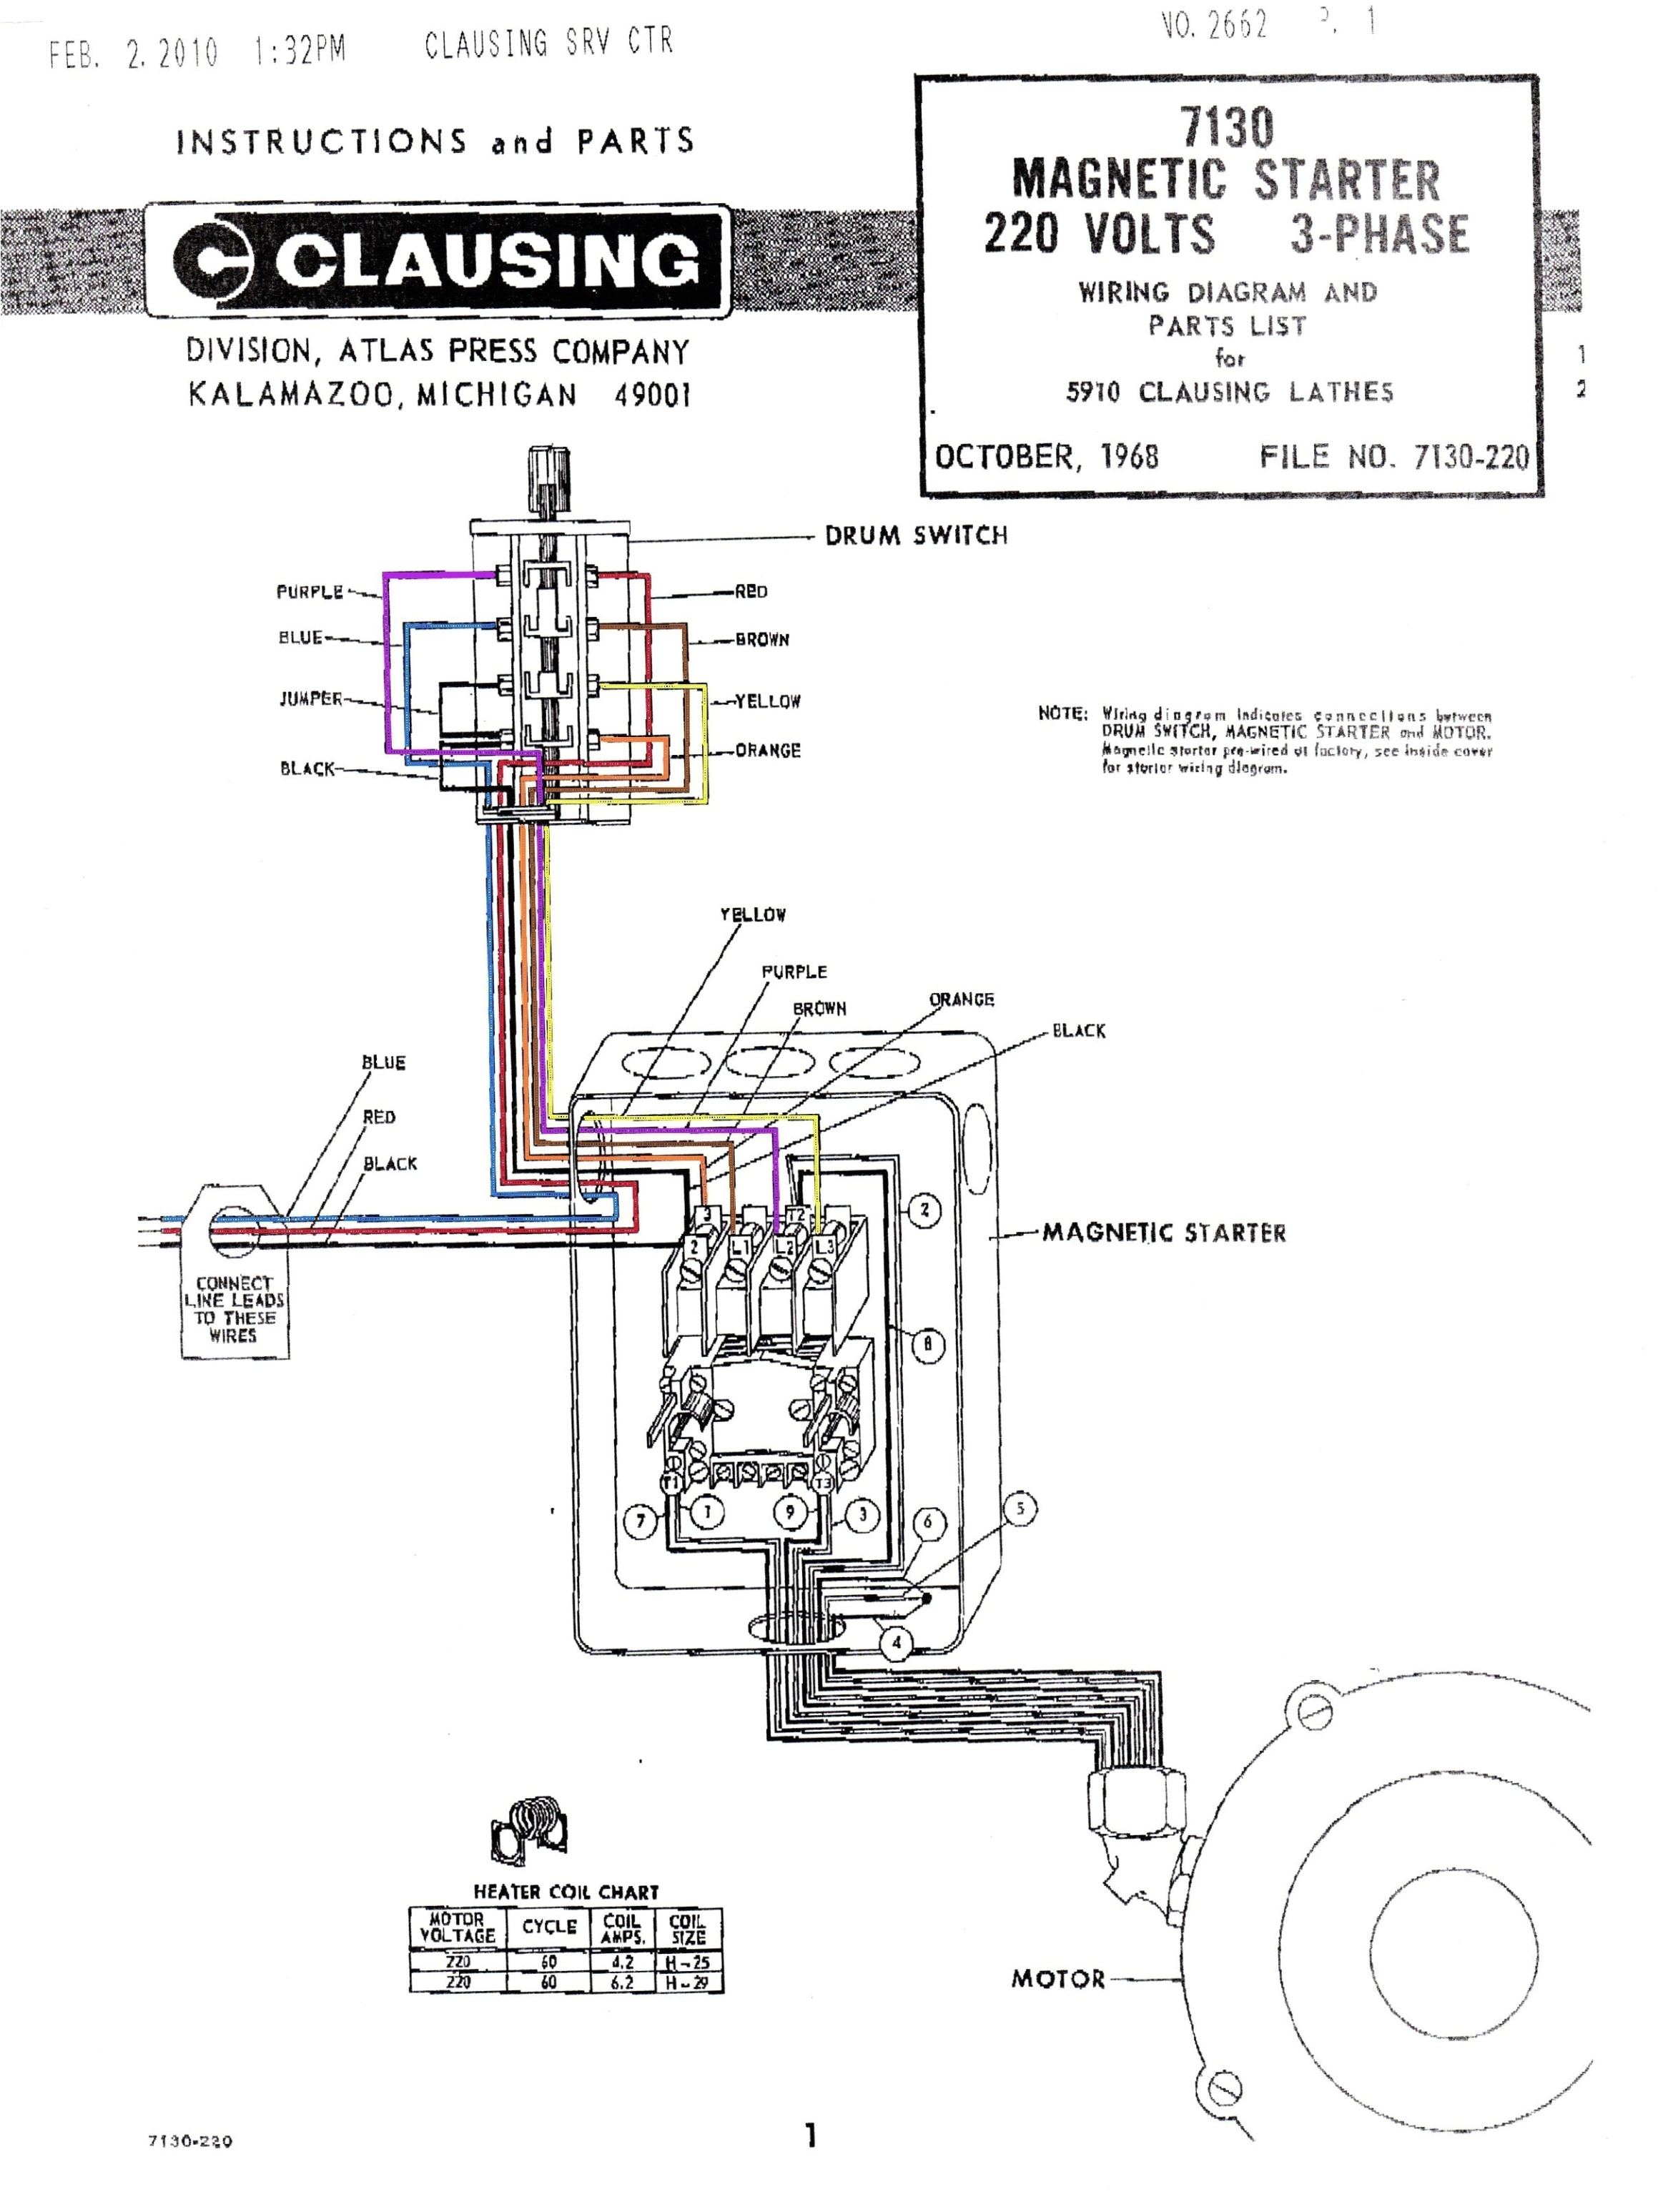 vfd mcc bucket diagram wiring diagram operations ab on vfd wiring diagram